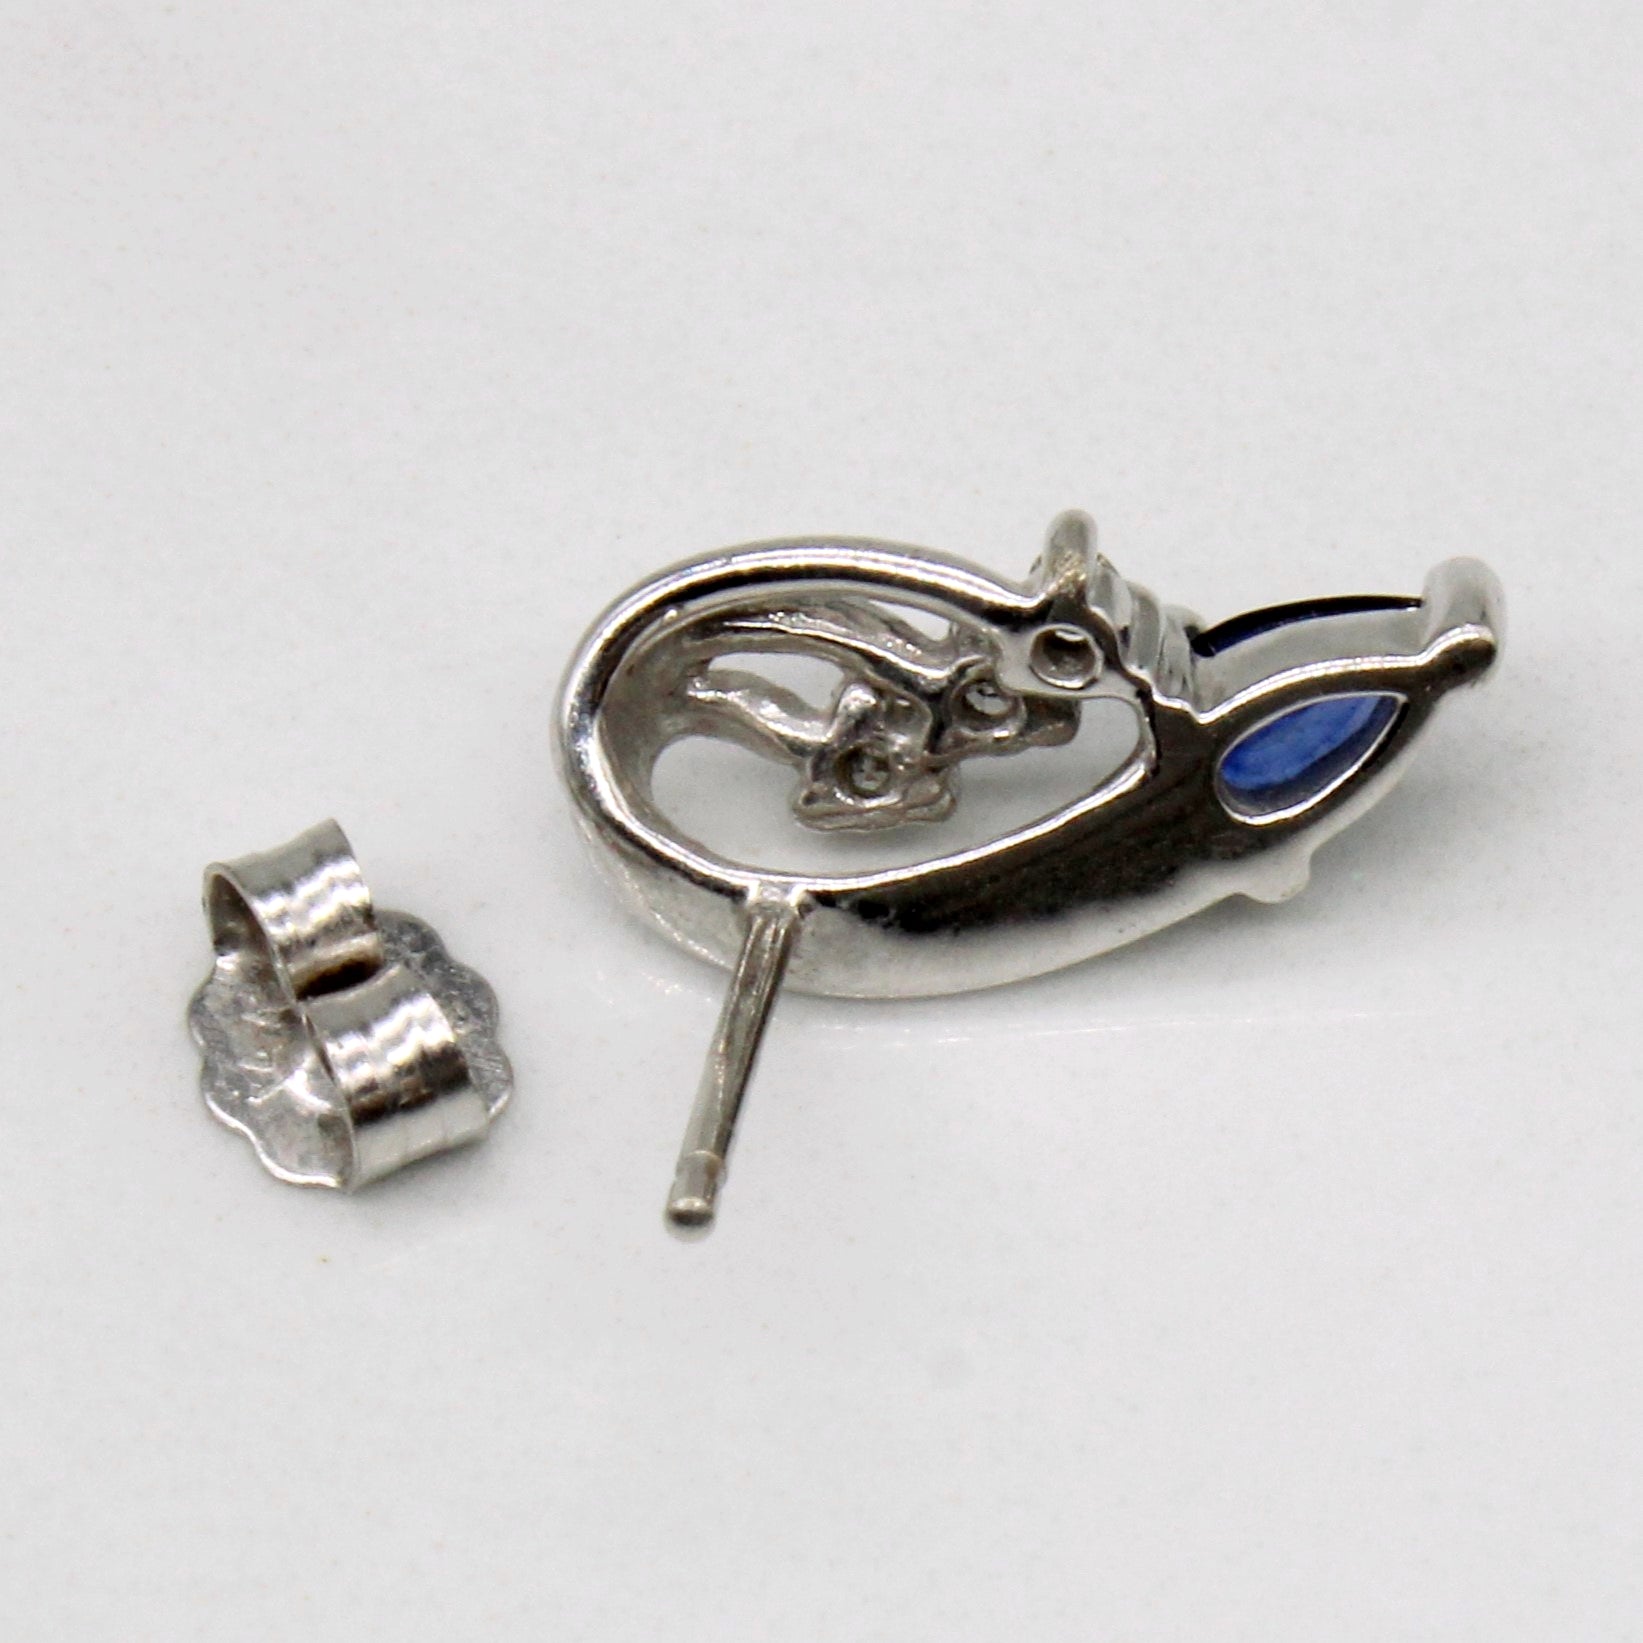 Sapphire & Diamond Earrings | 0.40ctw, 0.06ctw |